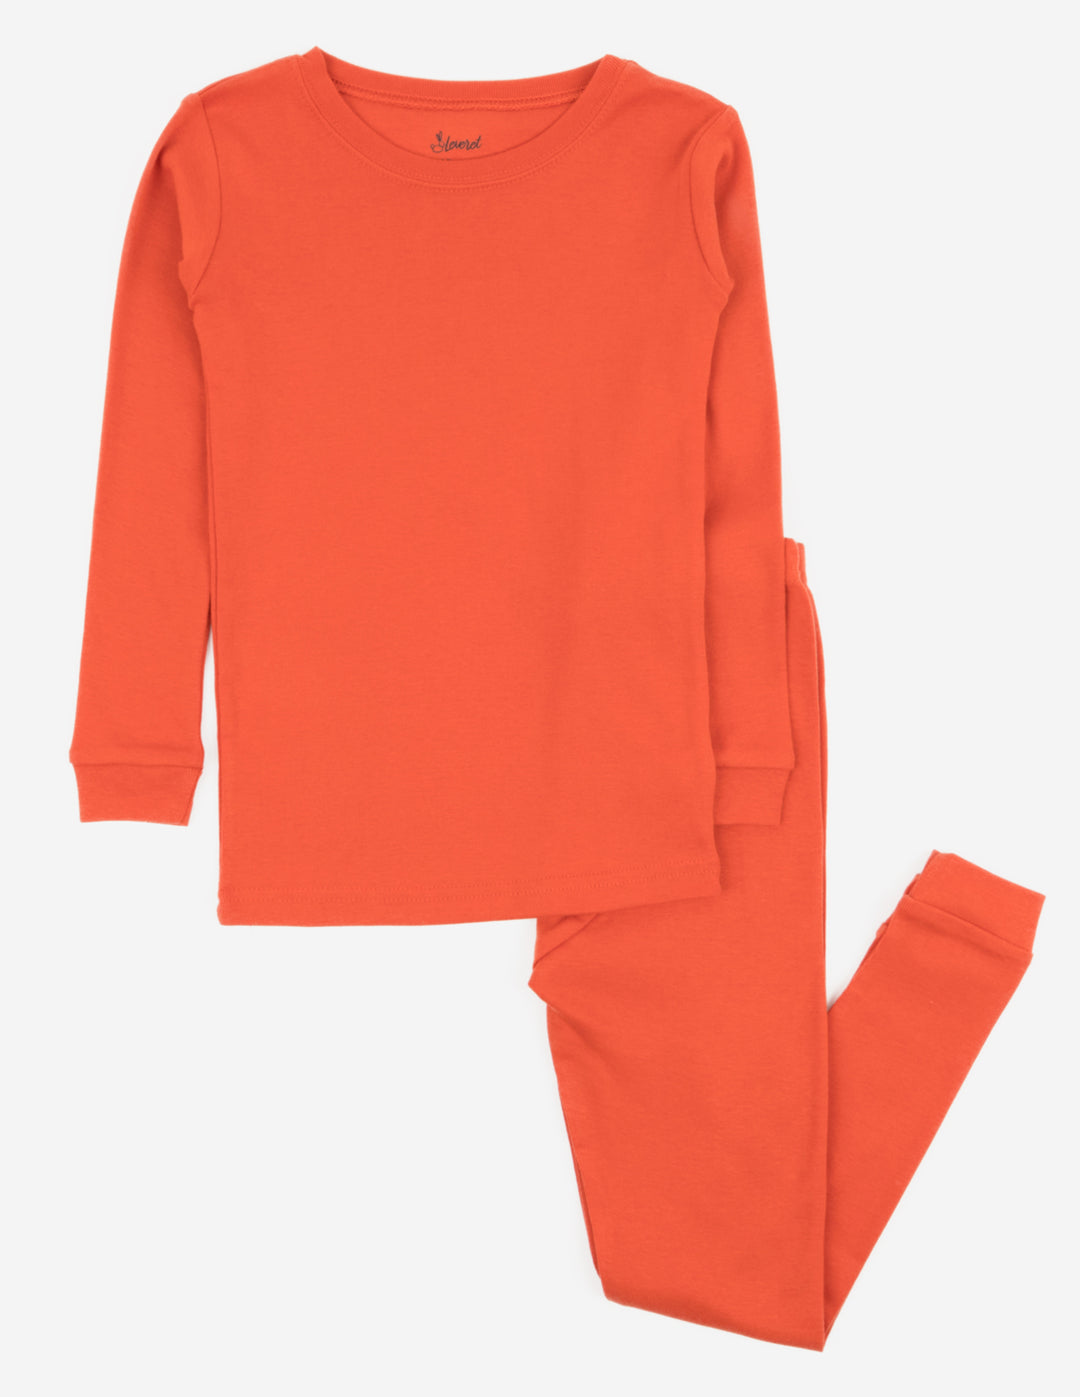 Lucky Brand NEW Long Sleeve Pajama Set Girls sz 8 NWT Coral Orange